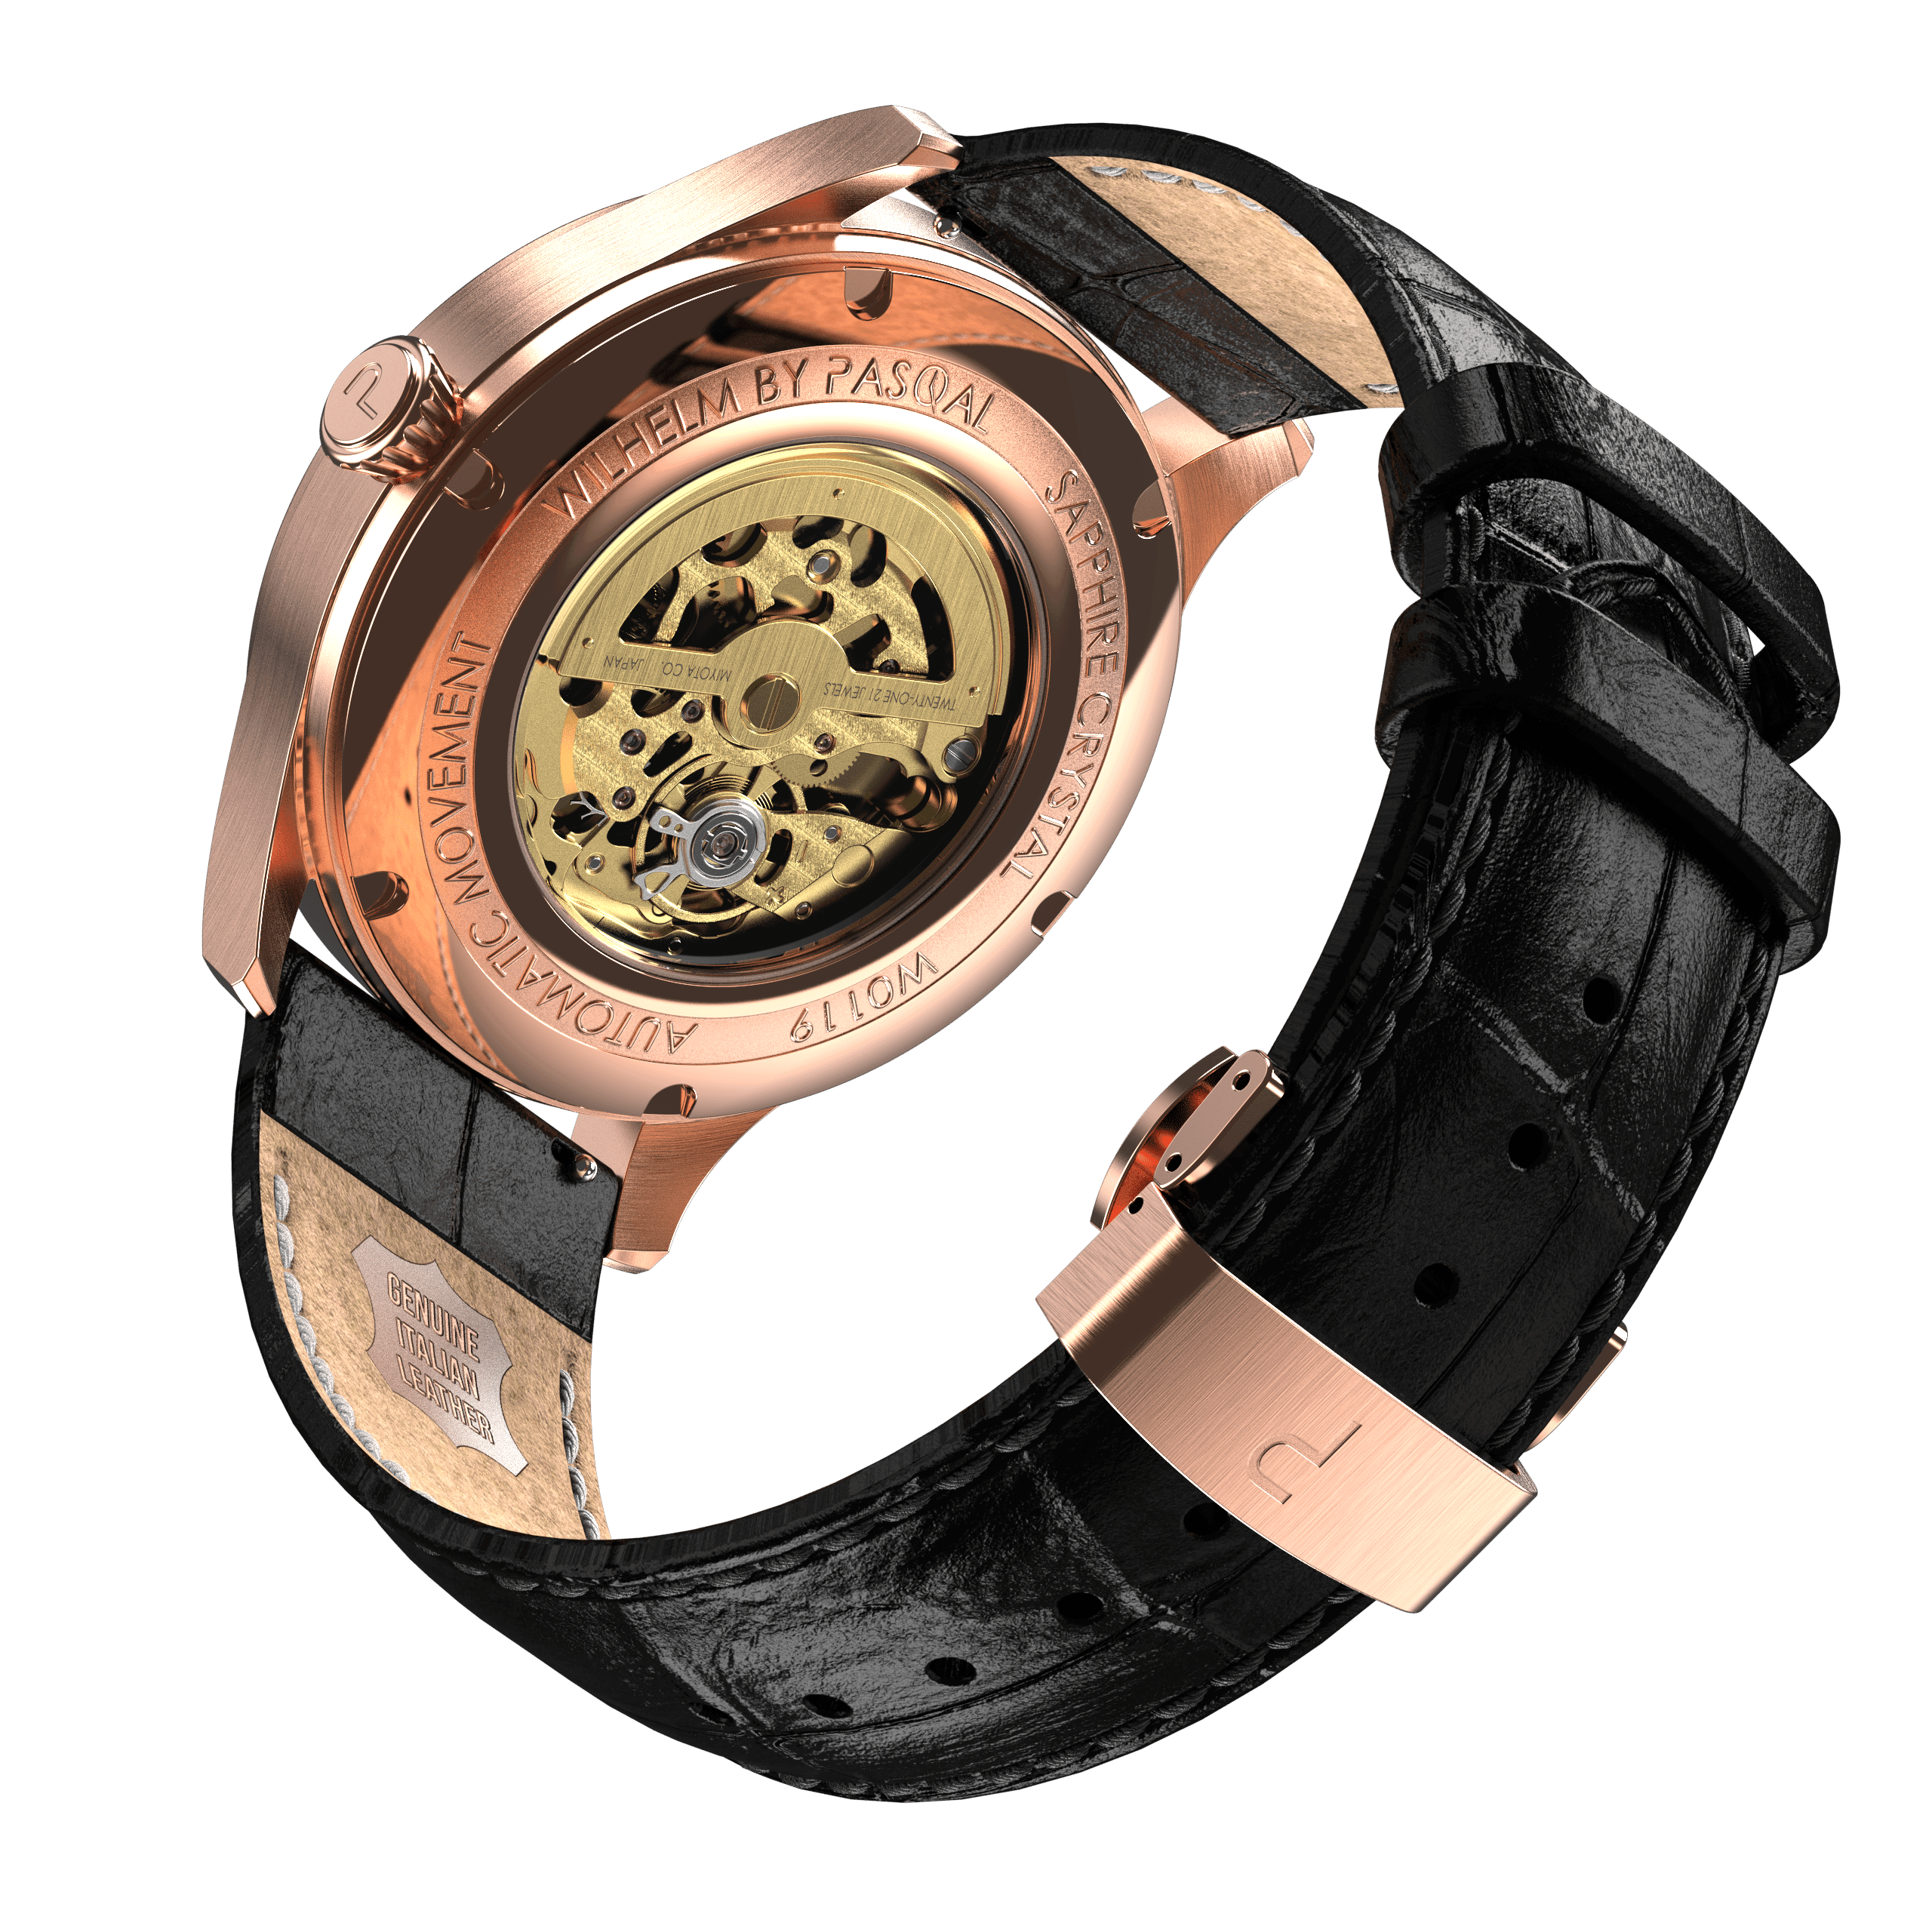 Wilhelm 42 Rosé/Black - Pasqal Watches